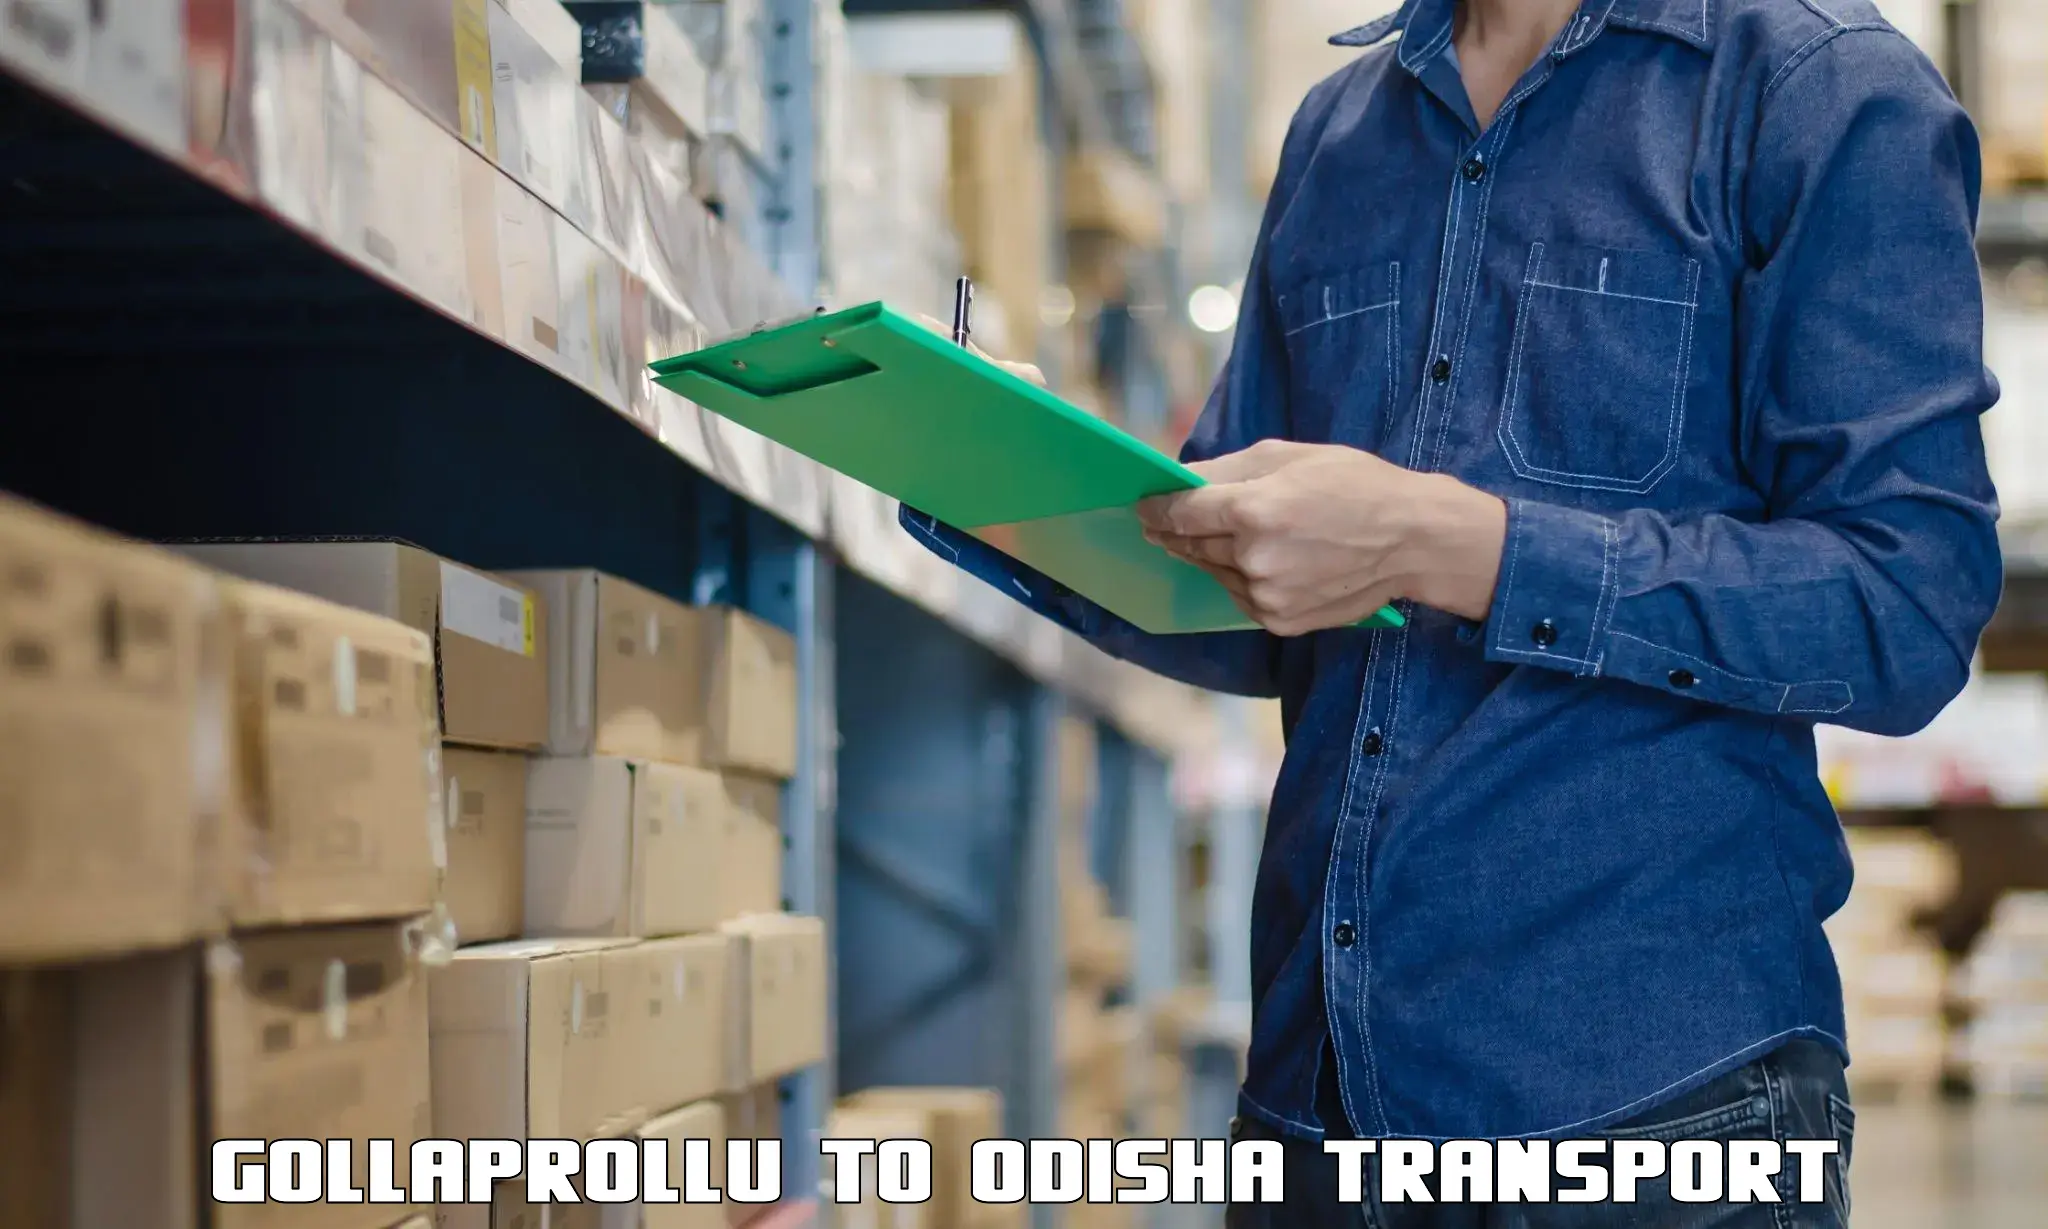 International cargo transportation services Gollaprollu to Kesinga